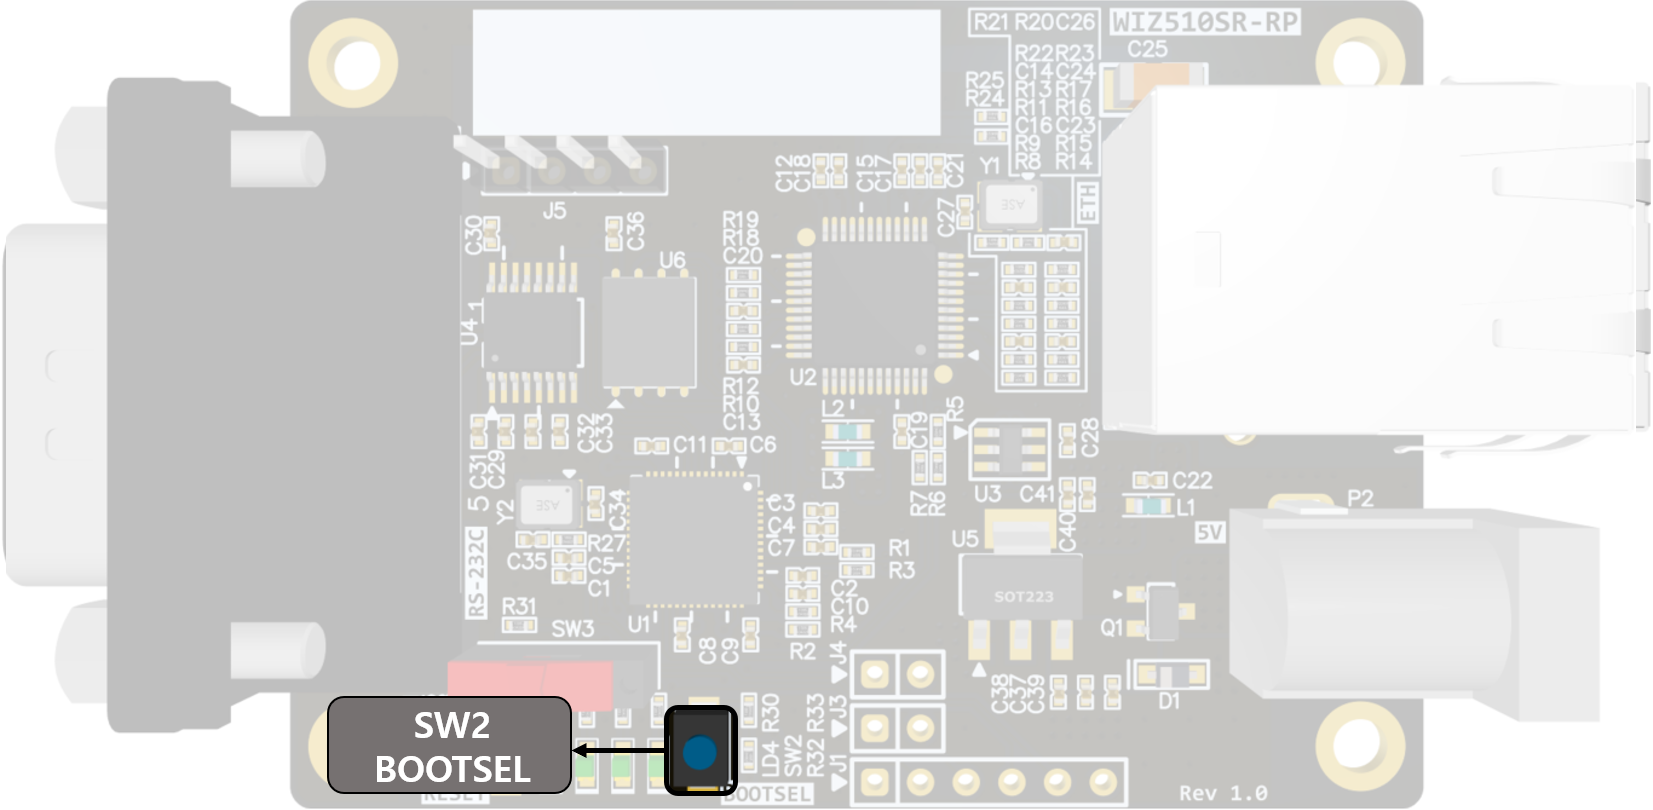 WIZ510SR-RP BOOTSEL Switch (SW2)